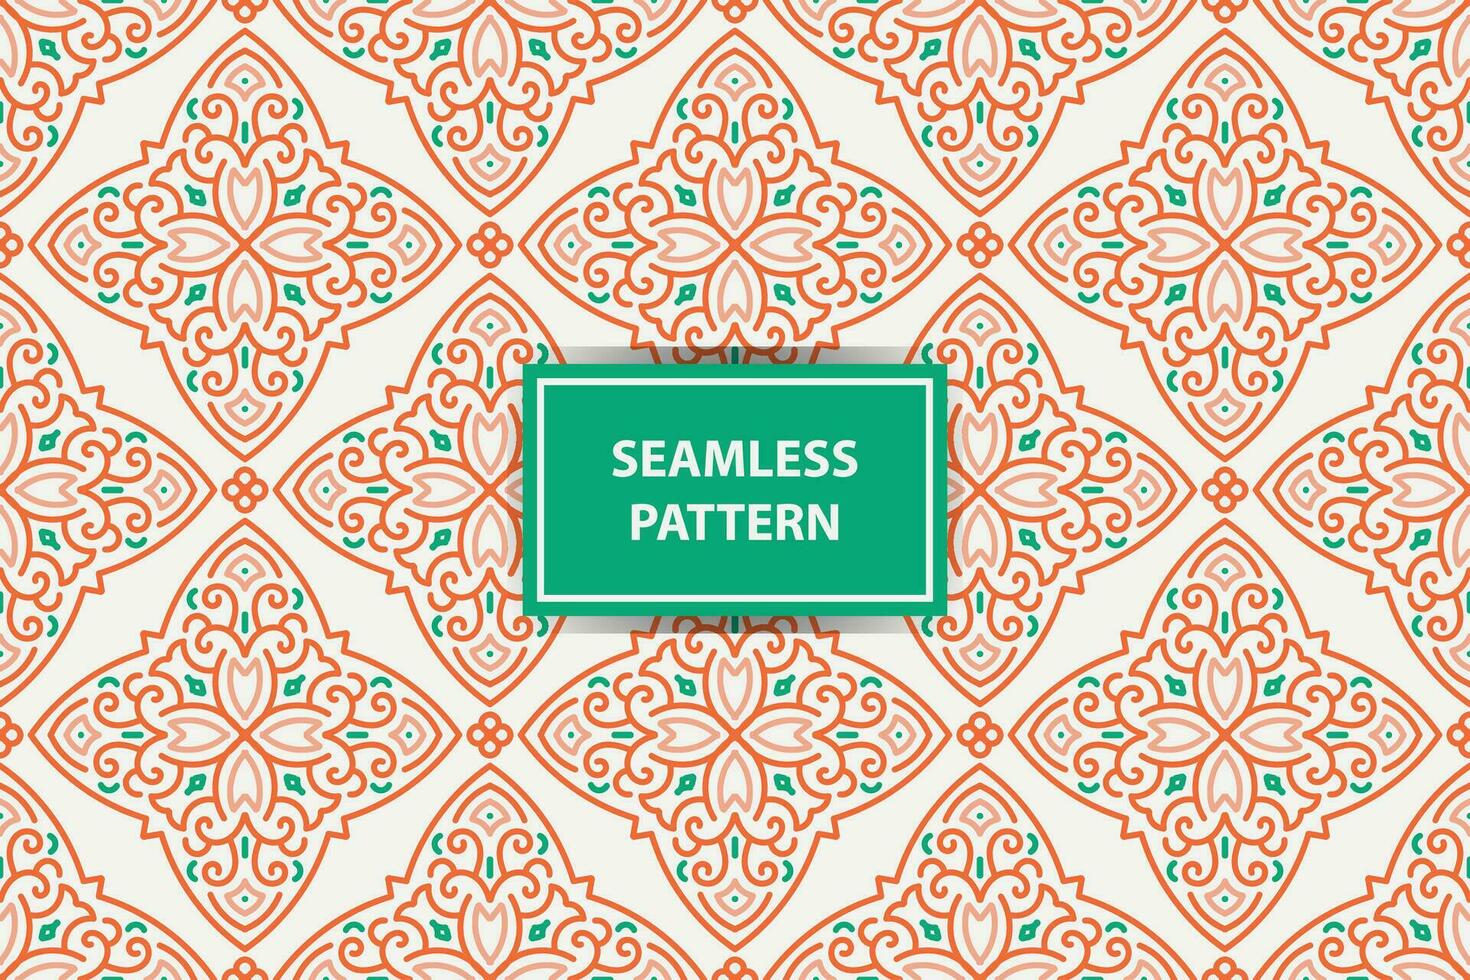 marockansk etnisk sömlös mönster design. aztec tyg matta mandala prydnad sparre textil- dekoration tapet. stam- Kalkon afrikansk indisk traditionell broderi vektor illustrationer bakgrund